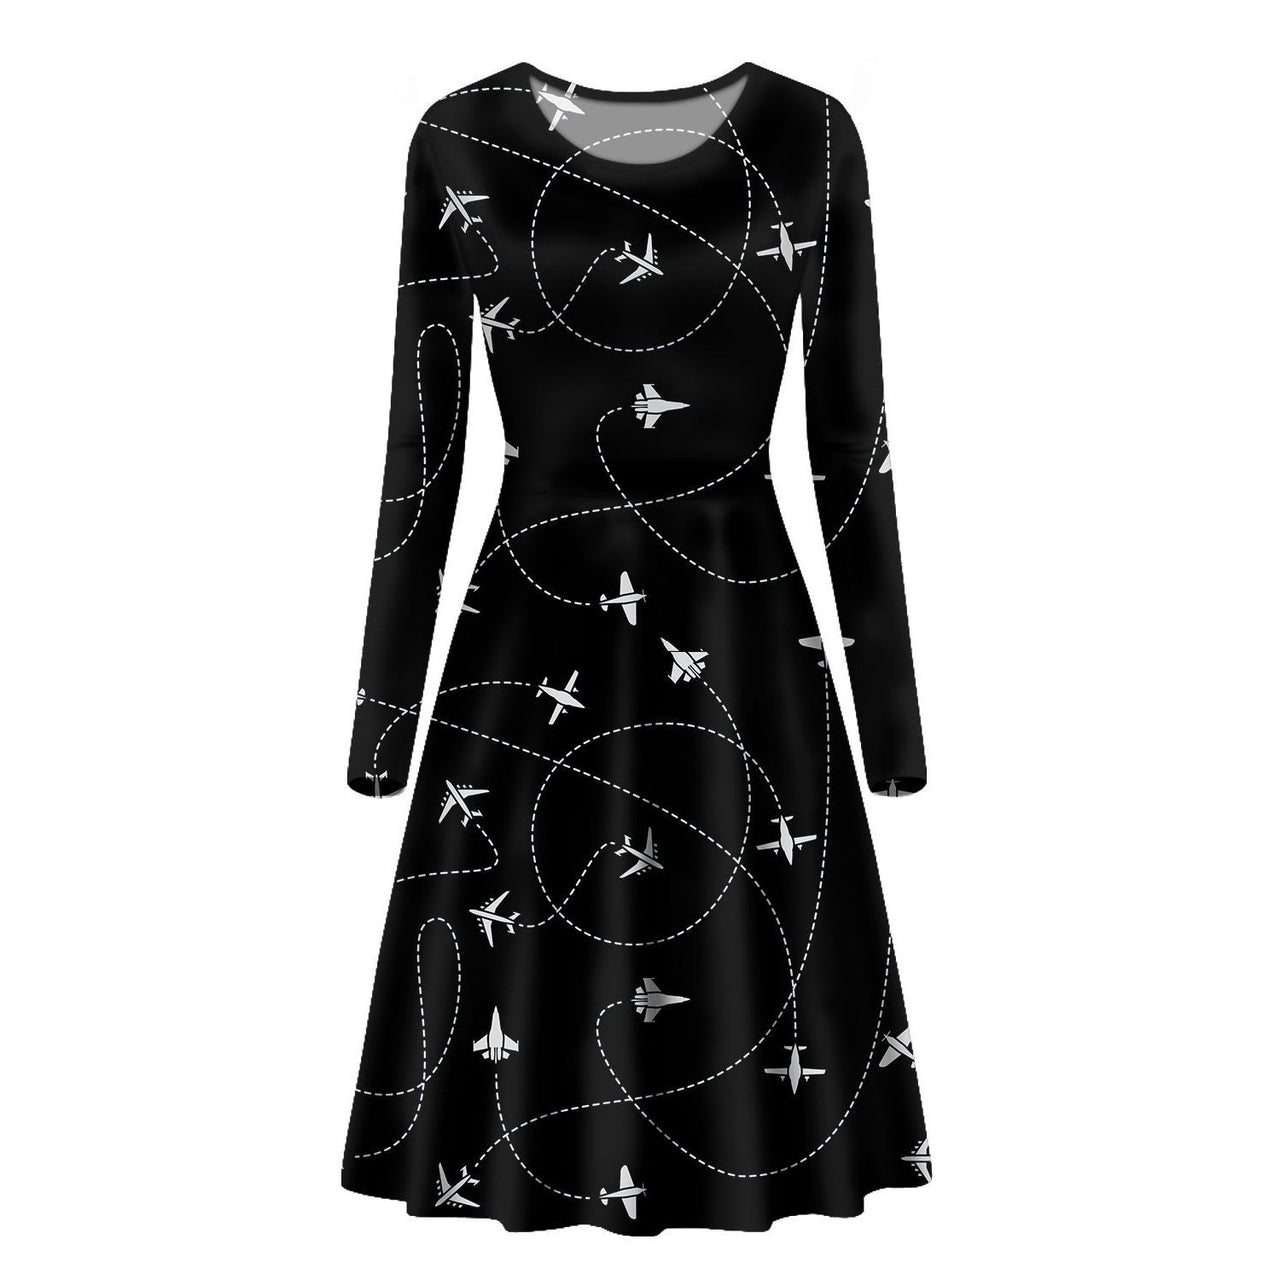 Travel The World By Plane (Black) Designed Long Sleeve Women Midi Dress